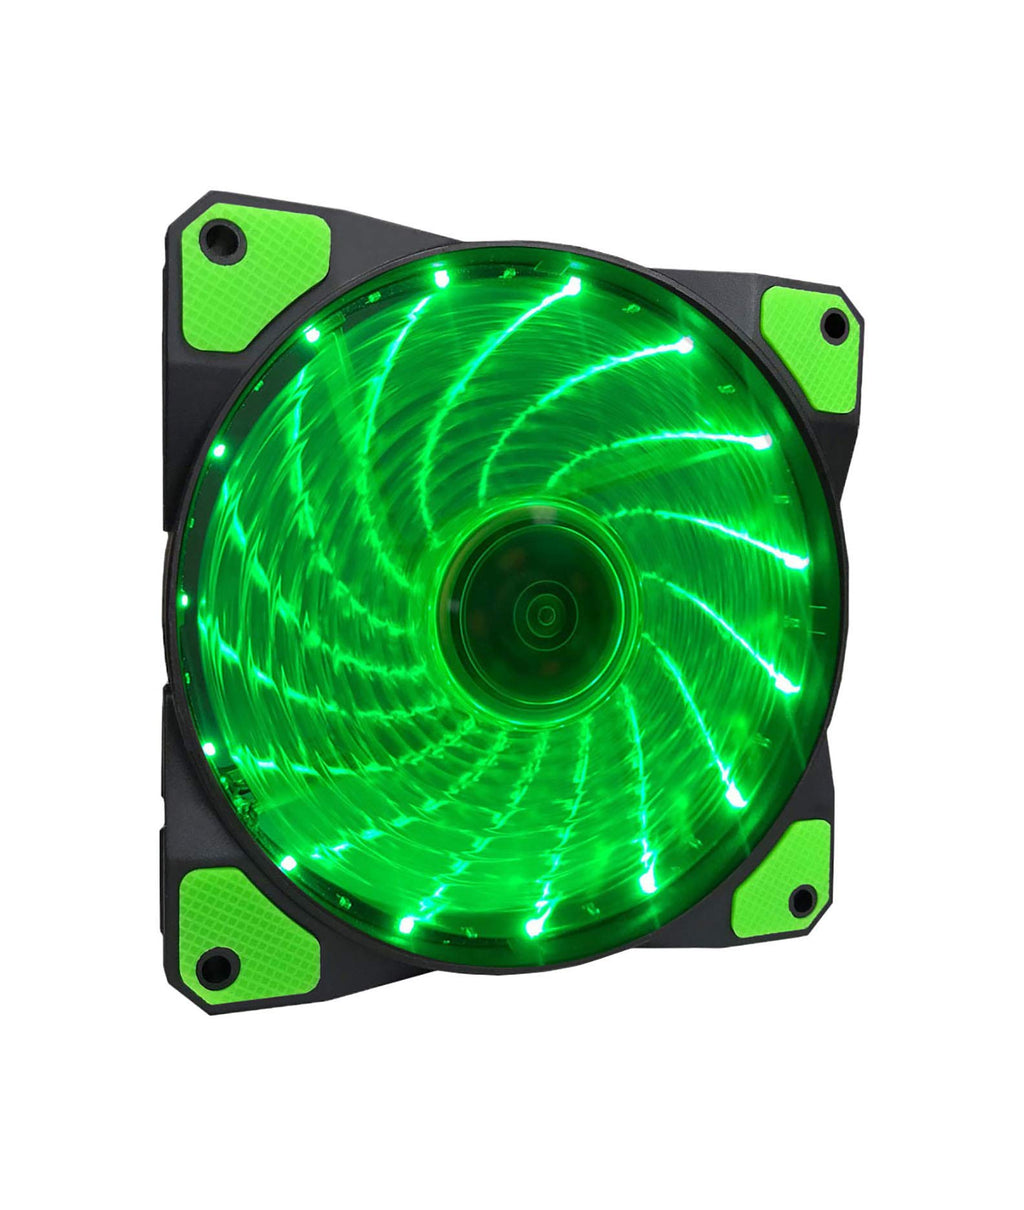  [AUSTRALIA] - APEVIA CF12SL-SGN 120mm Green LED Ultra Silent Case Fan w/Anti-Vibration Rubber Pads S-Series Green